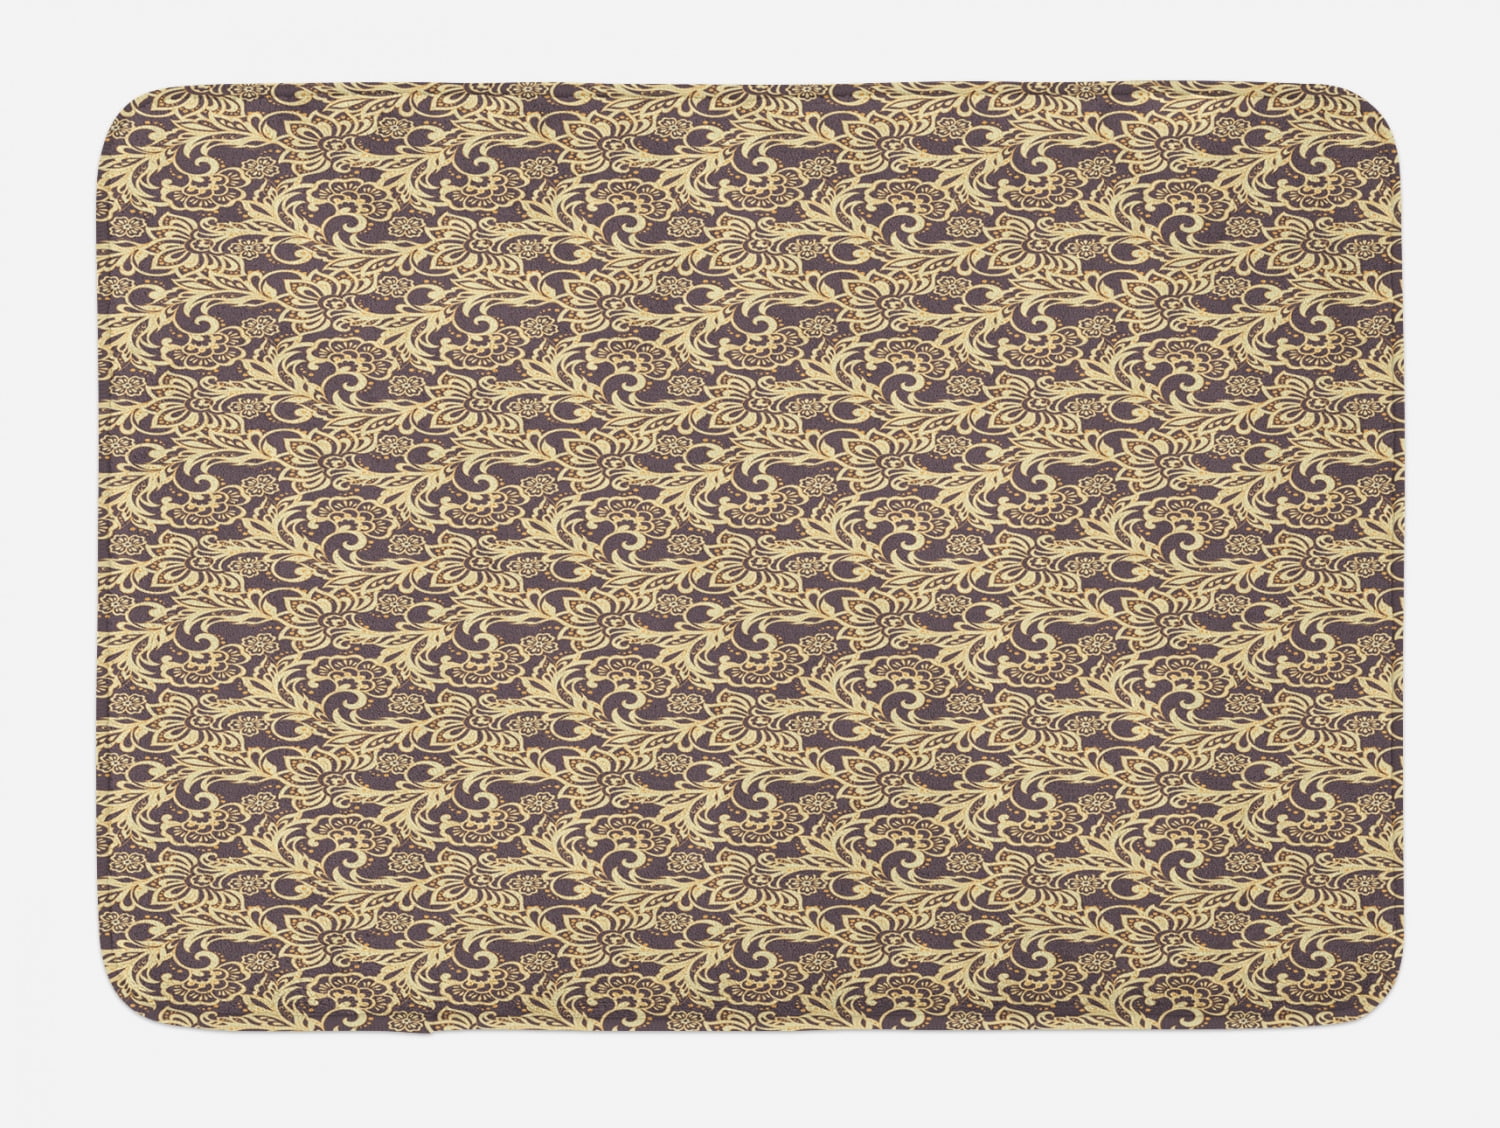 The snakeskin Absorbent Soft Flannel Bathroom Floor Shower Mat Rug Non-slip Gold 